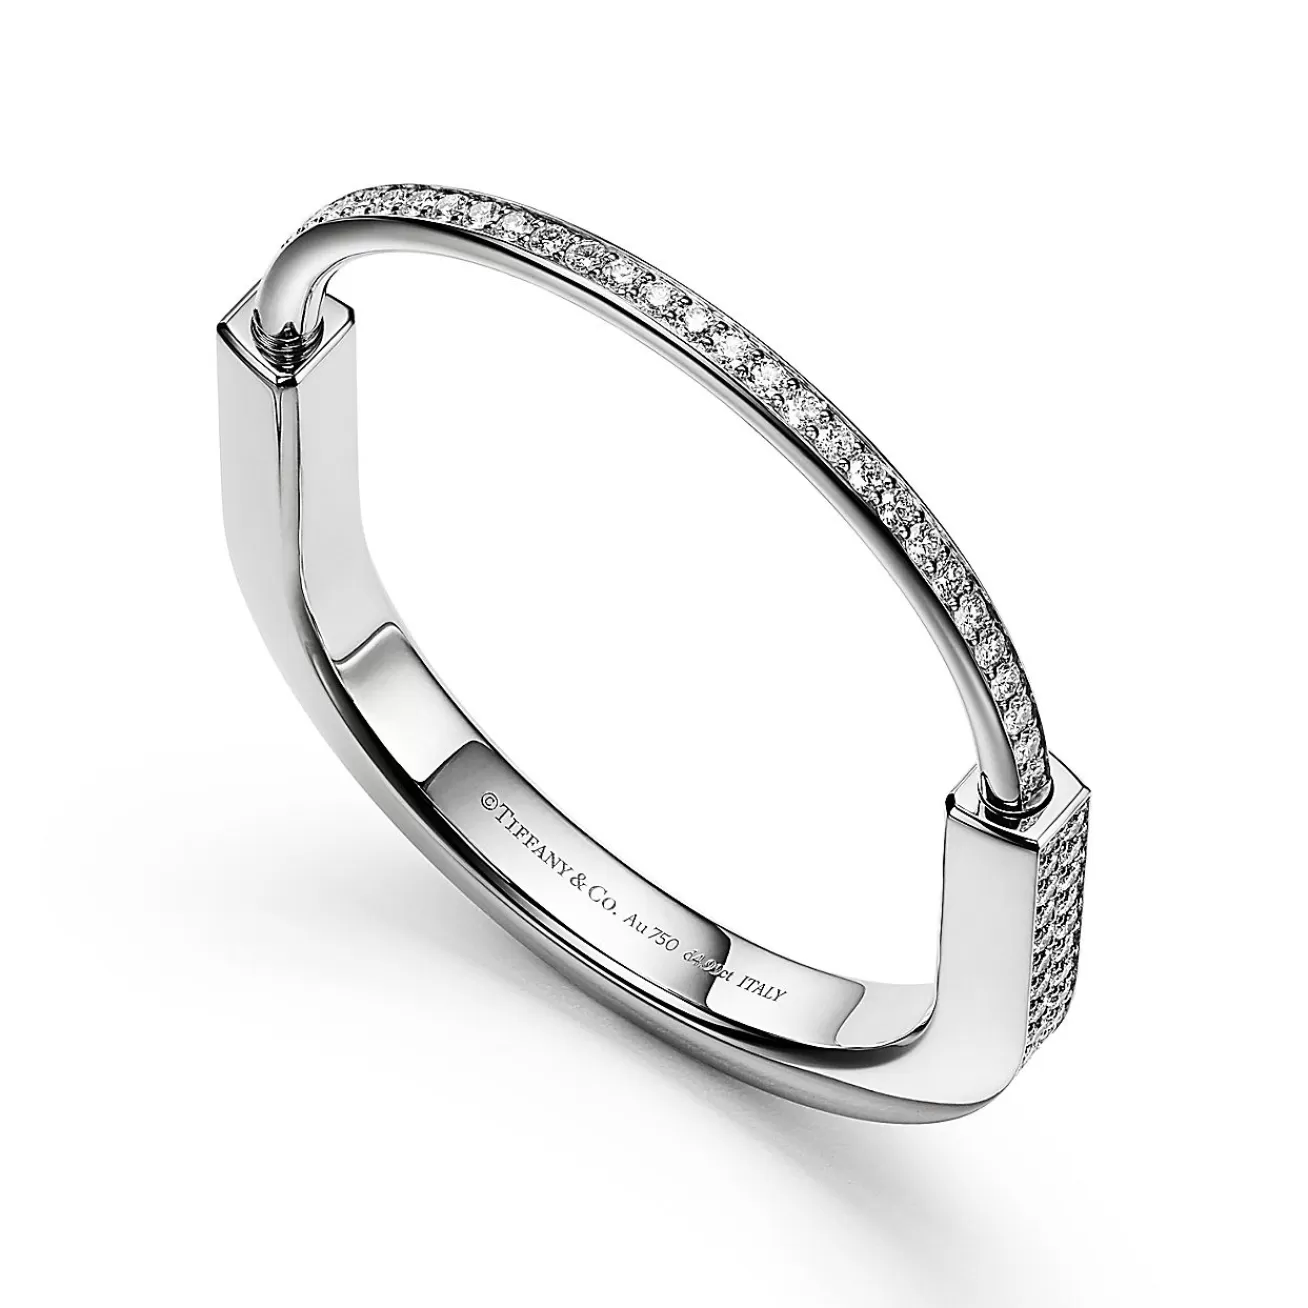 Tiffany & Co. Tiffany Lock Bangle in White Gold with Full Pavé Diamonds | ^ Bracelets | Men's Jewelry